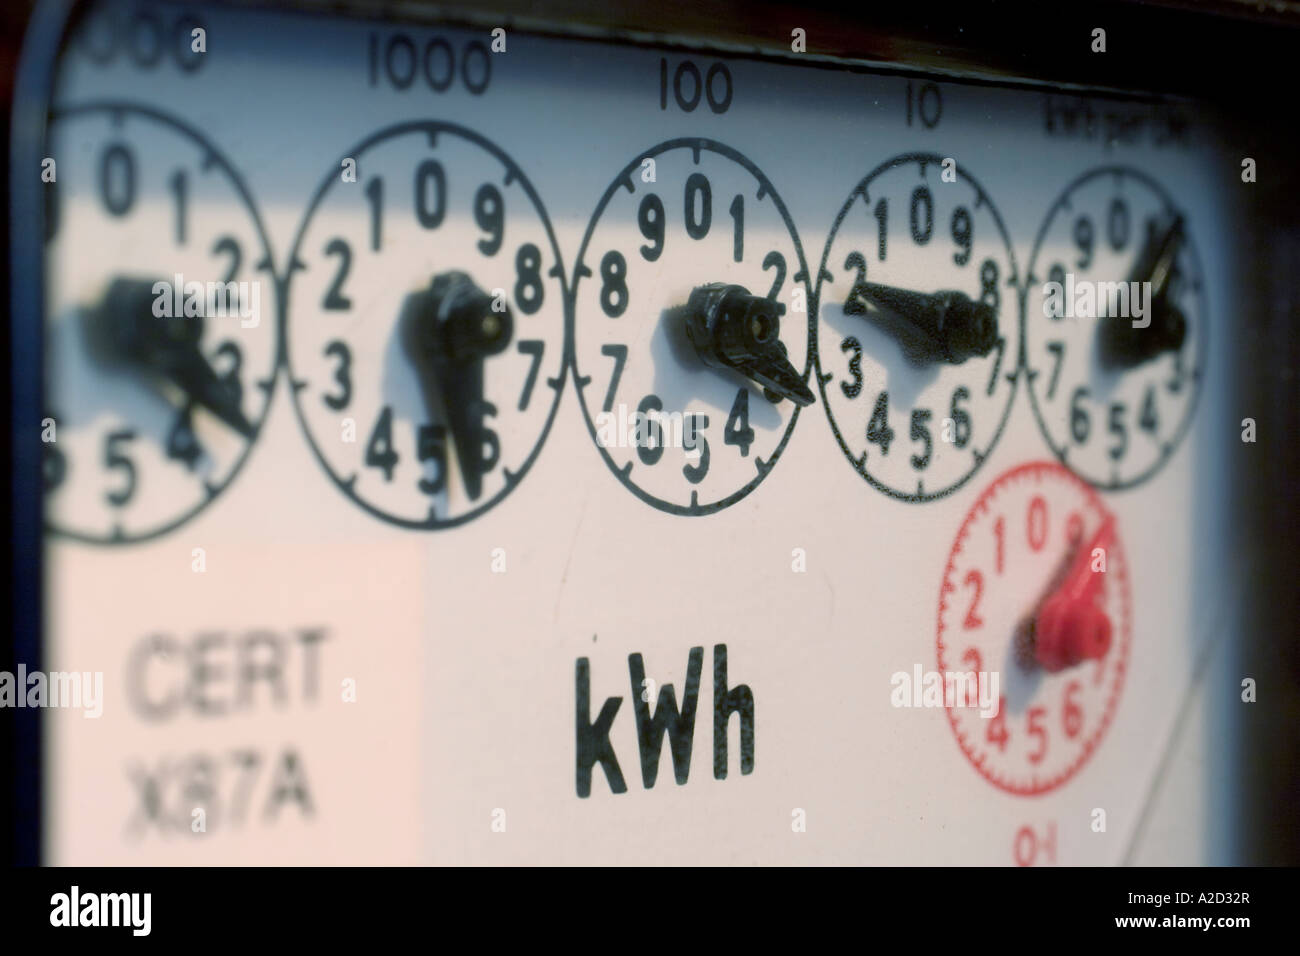 dials on standard UK electricity meter measuring kilowatts per hour Stock Photo